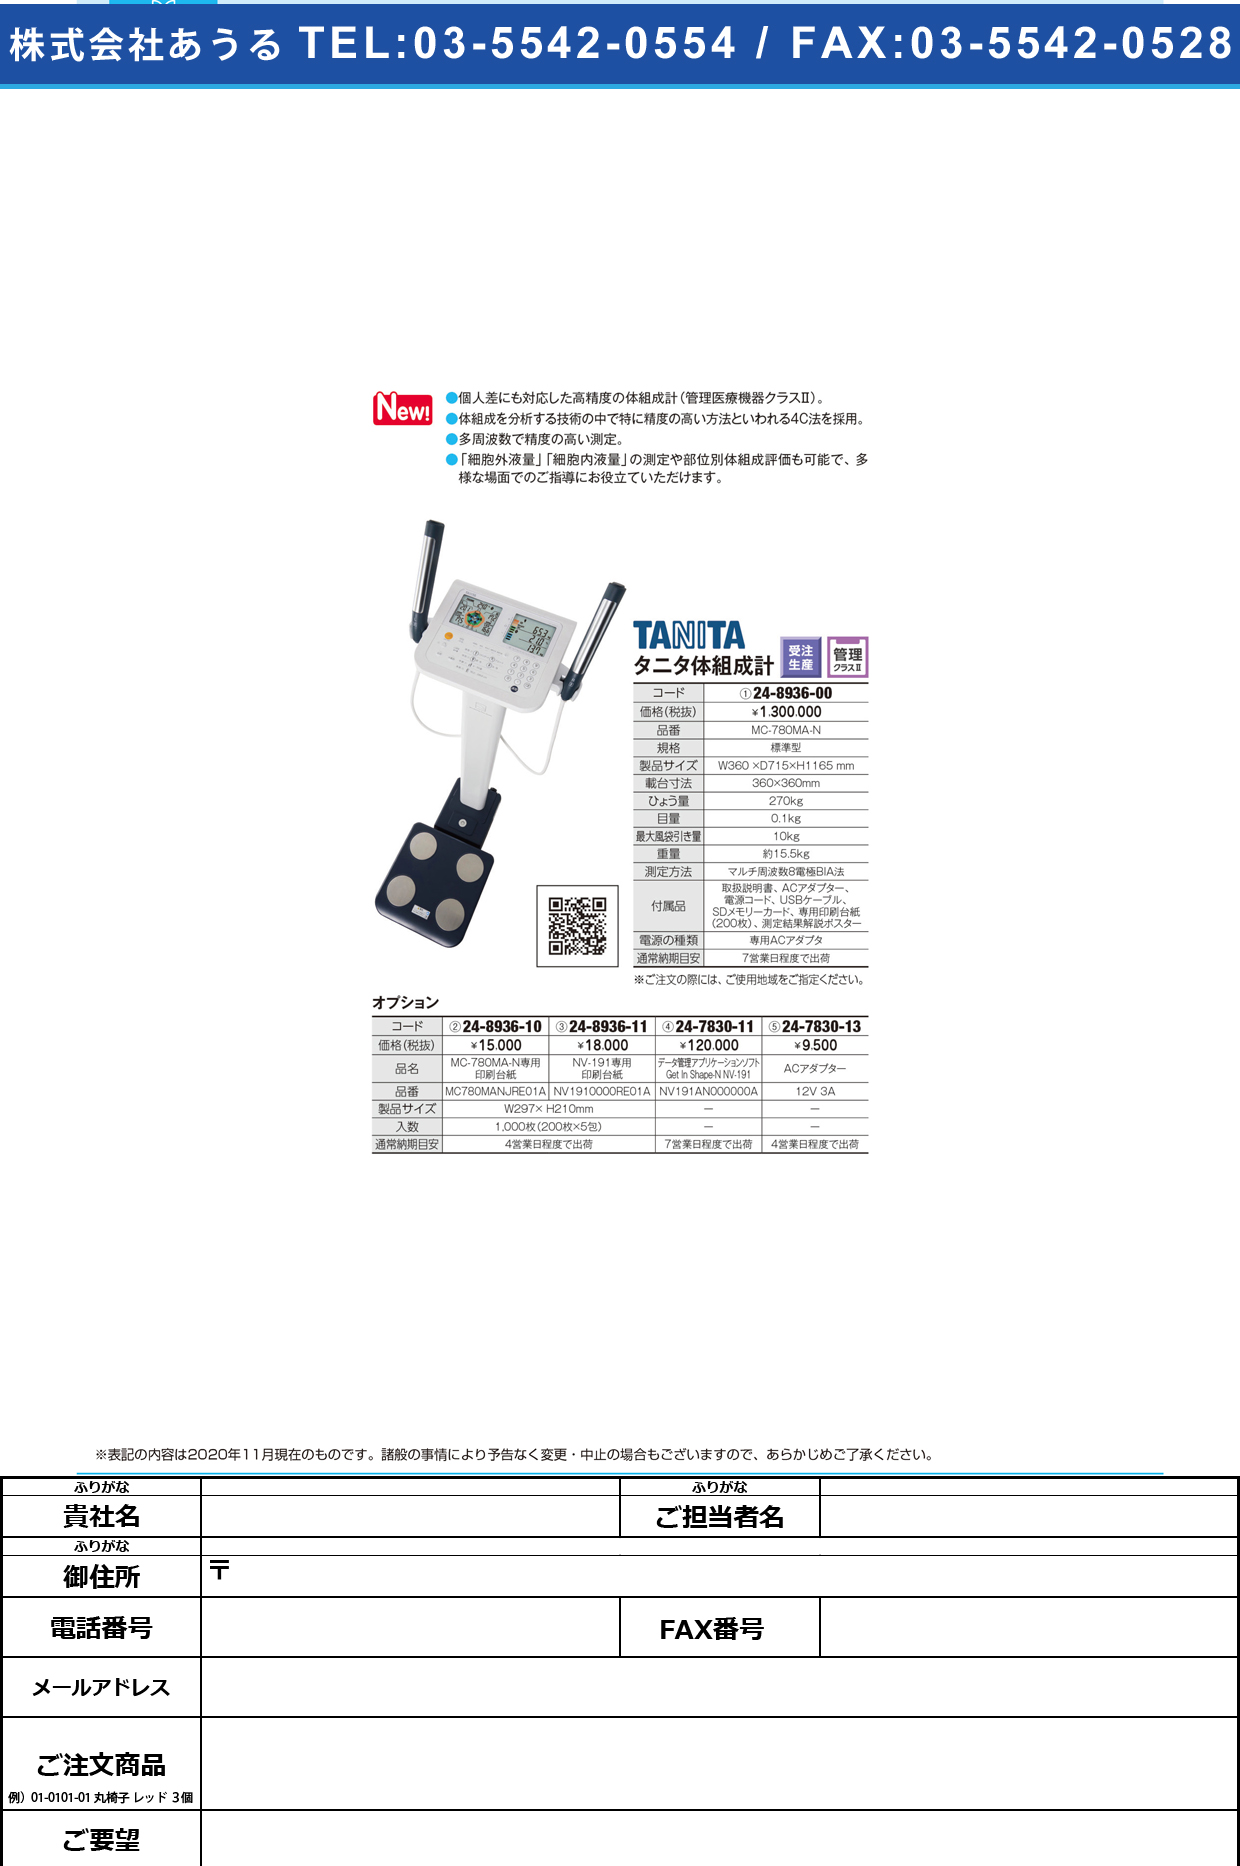 NV-191専用印刷台紙 MC-780MAーNヨウ(1000マイ)MC-780MAｰNﾖｳ(1000ﾏｲ)(24-8936-11)【タニタ】(販売単位:1)